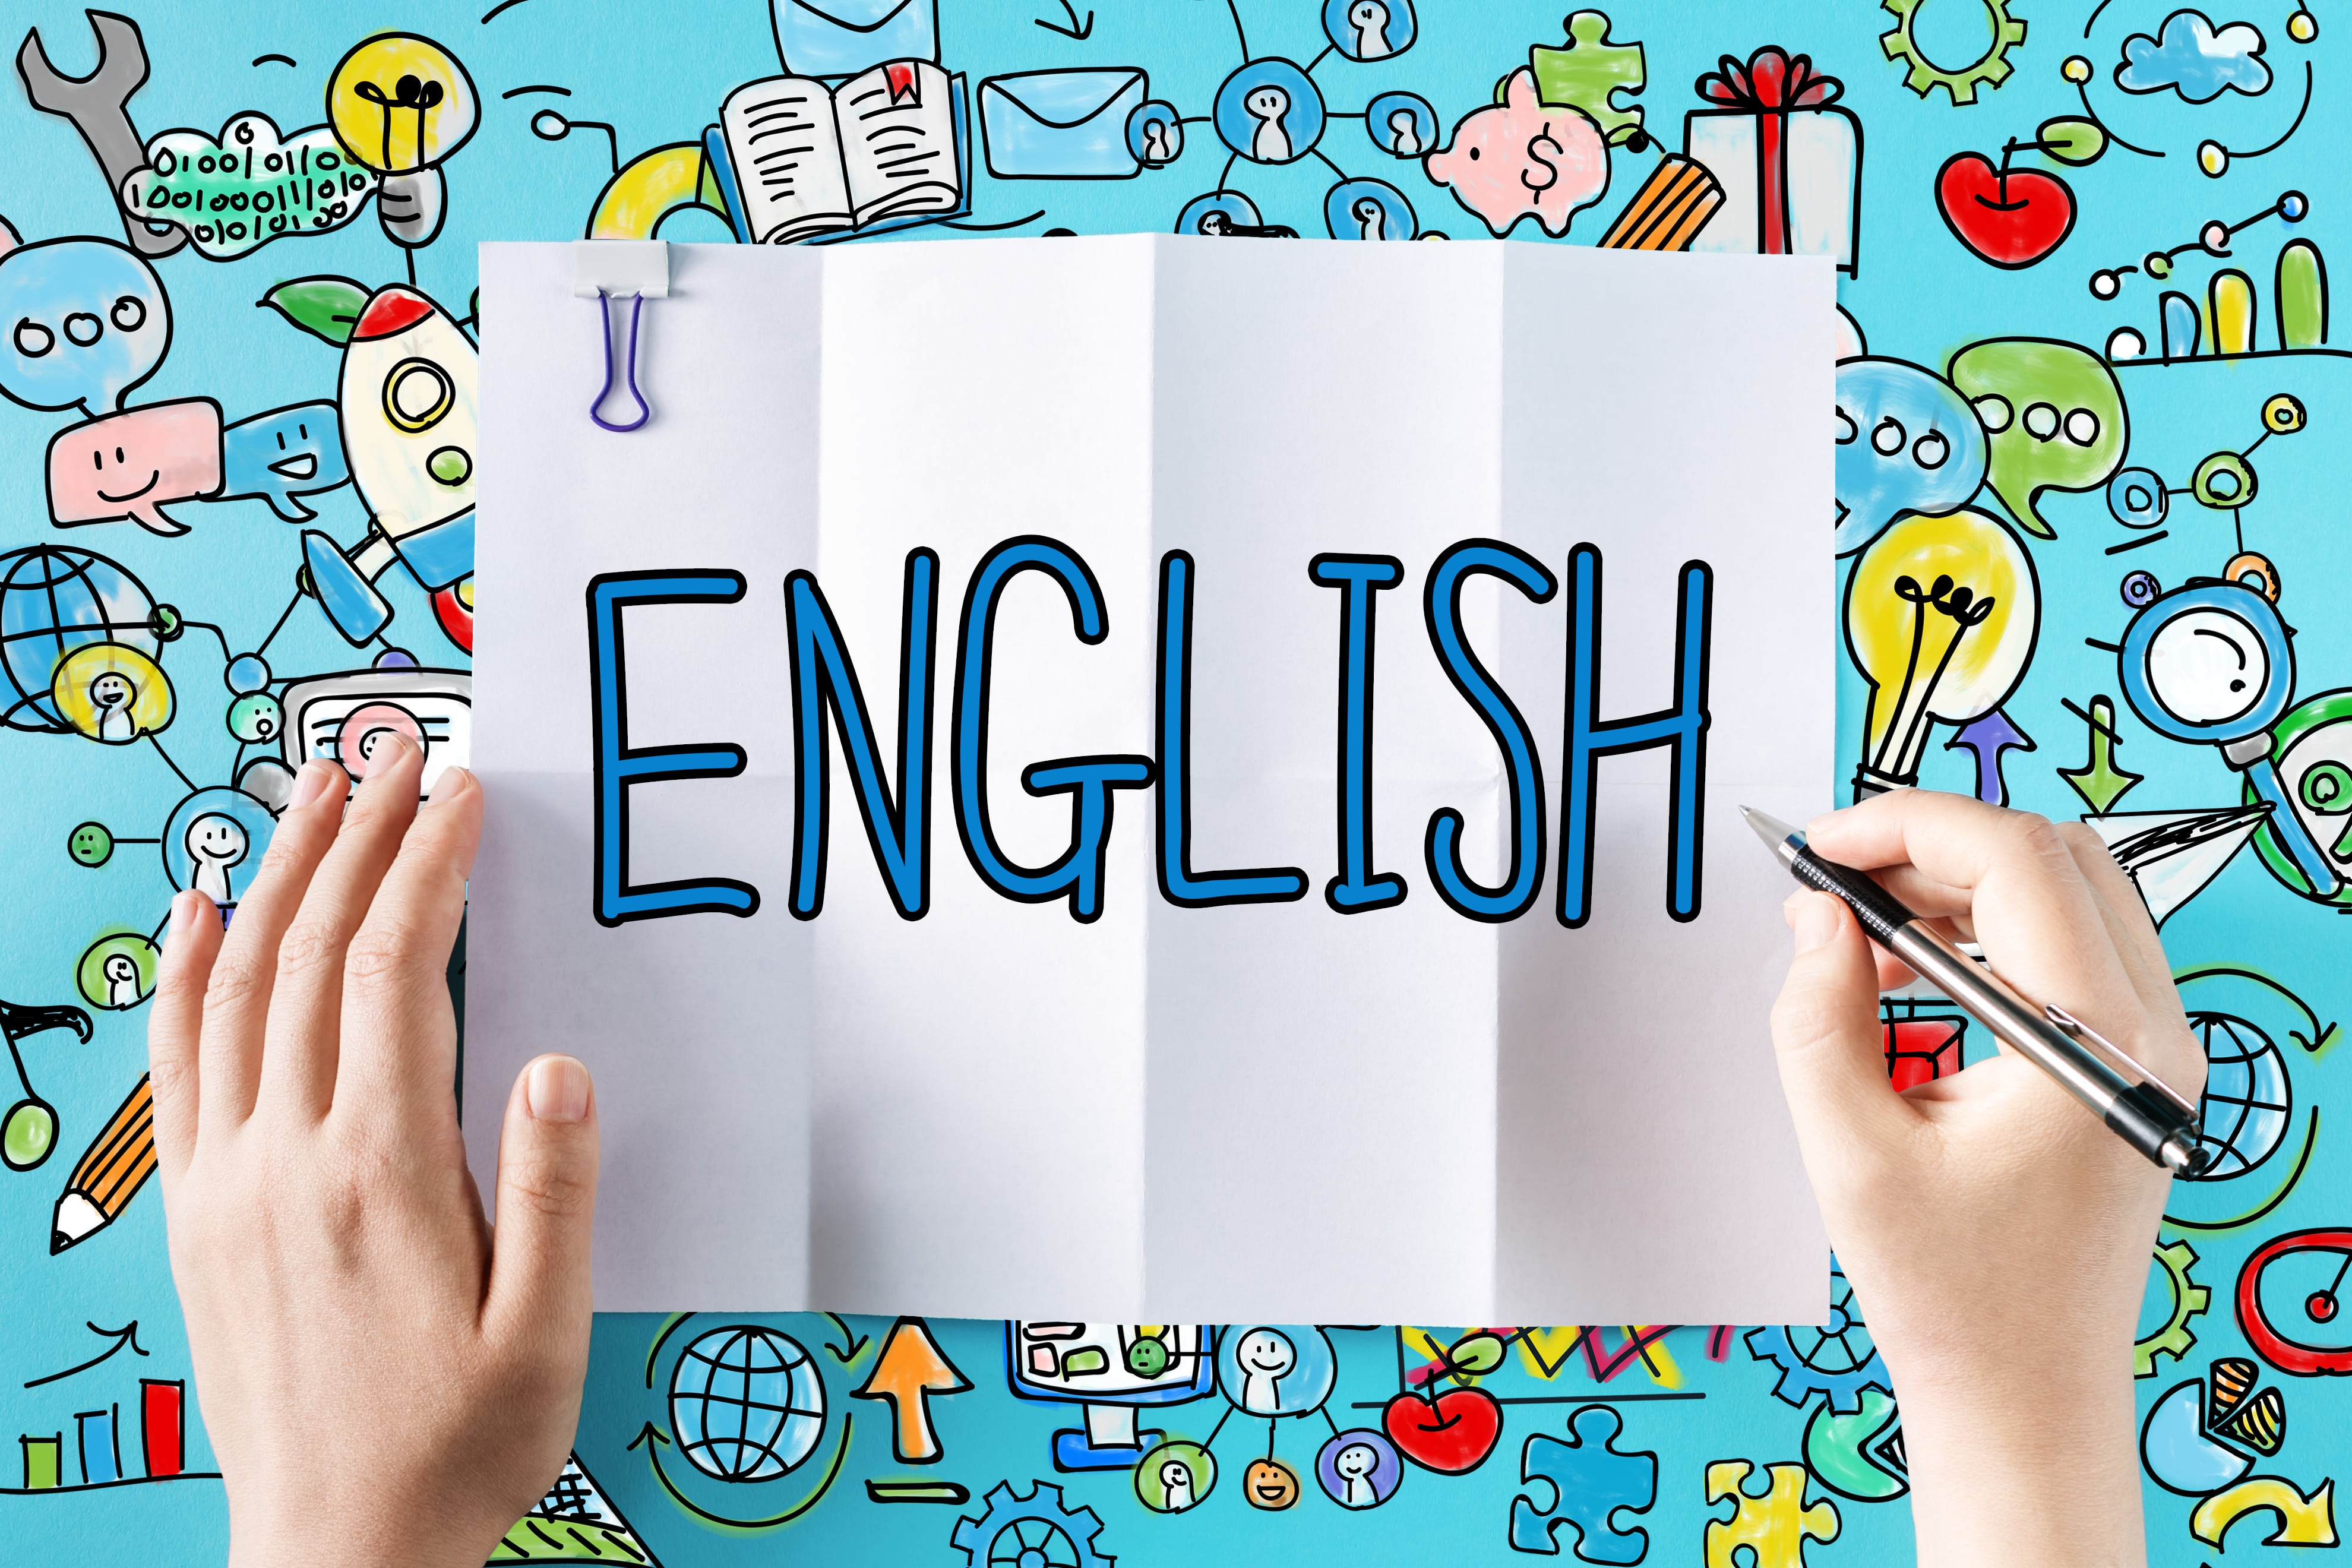 How to improve English writing skills